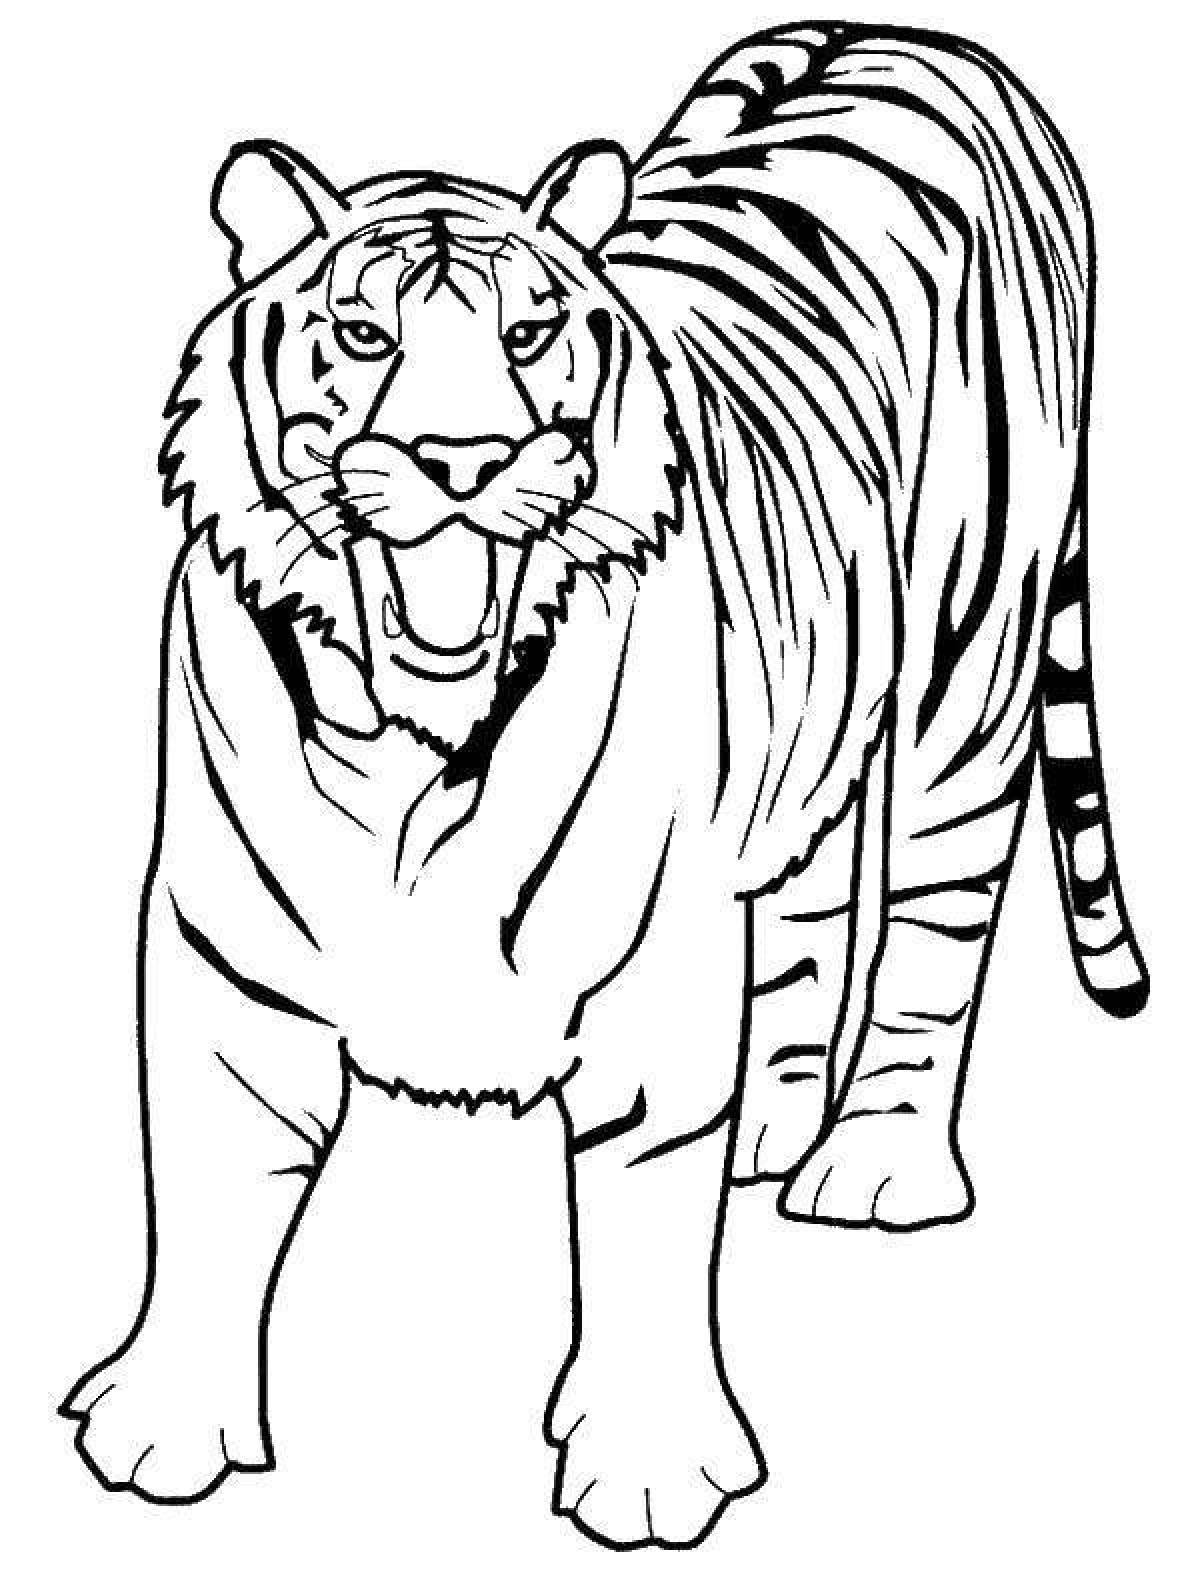 Impressive bengal tiger coloring page